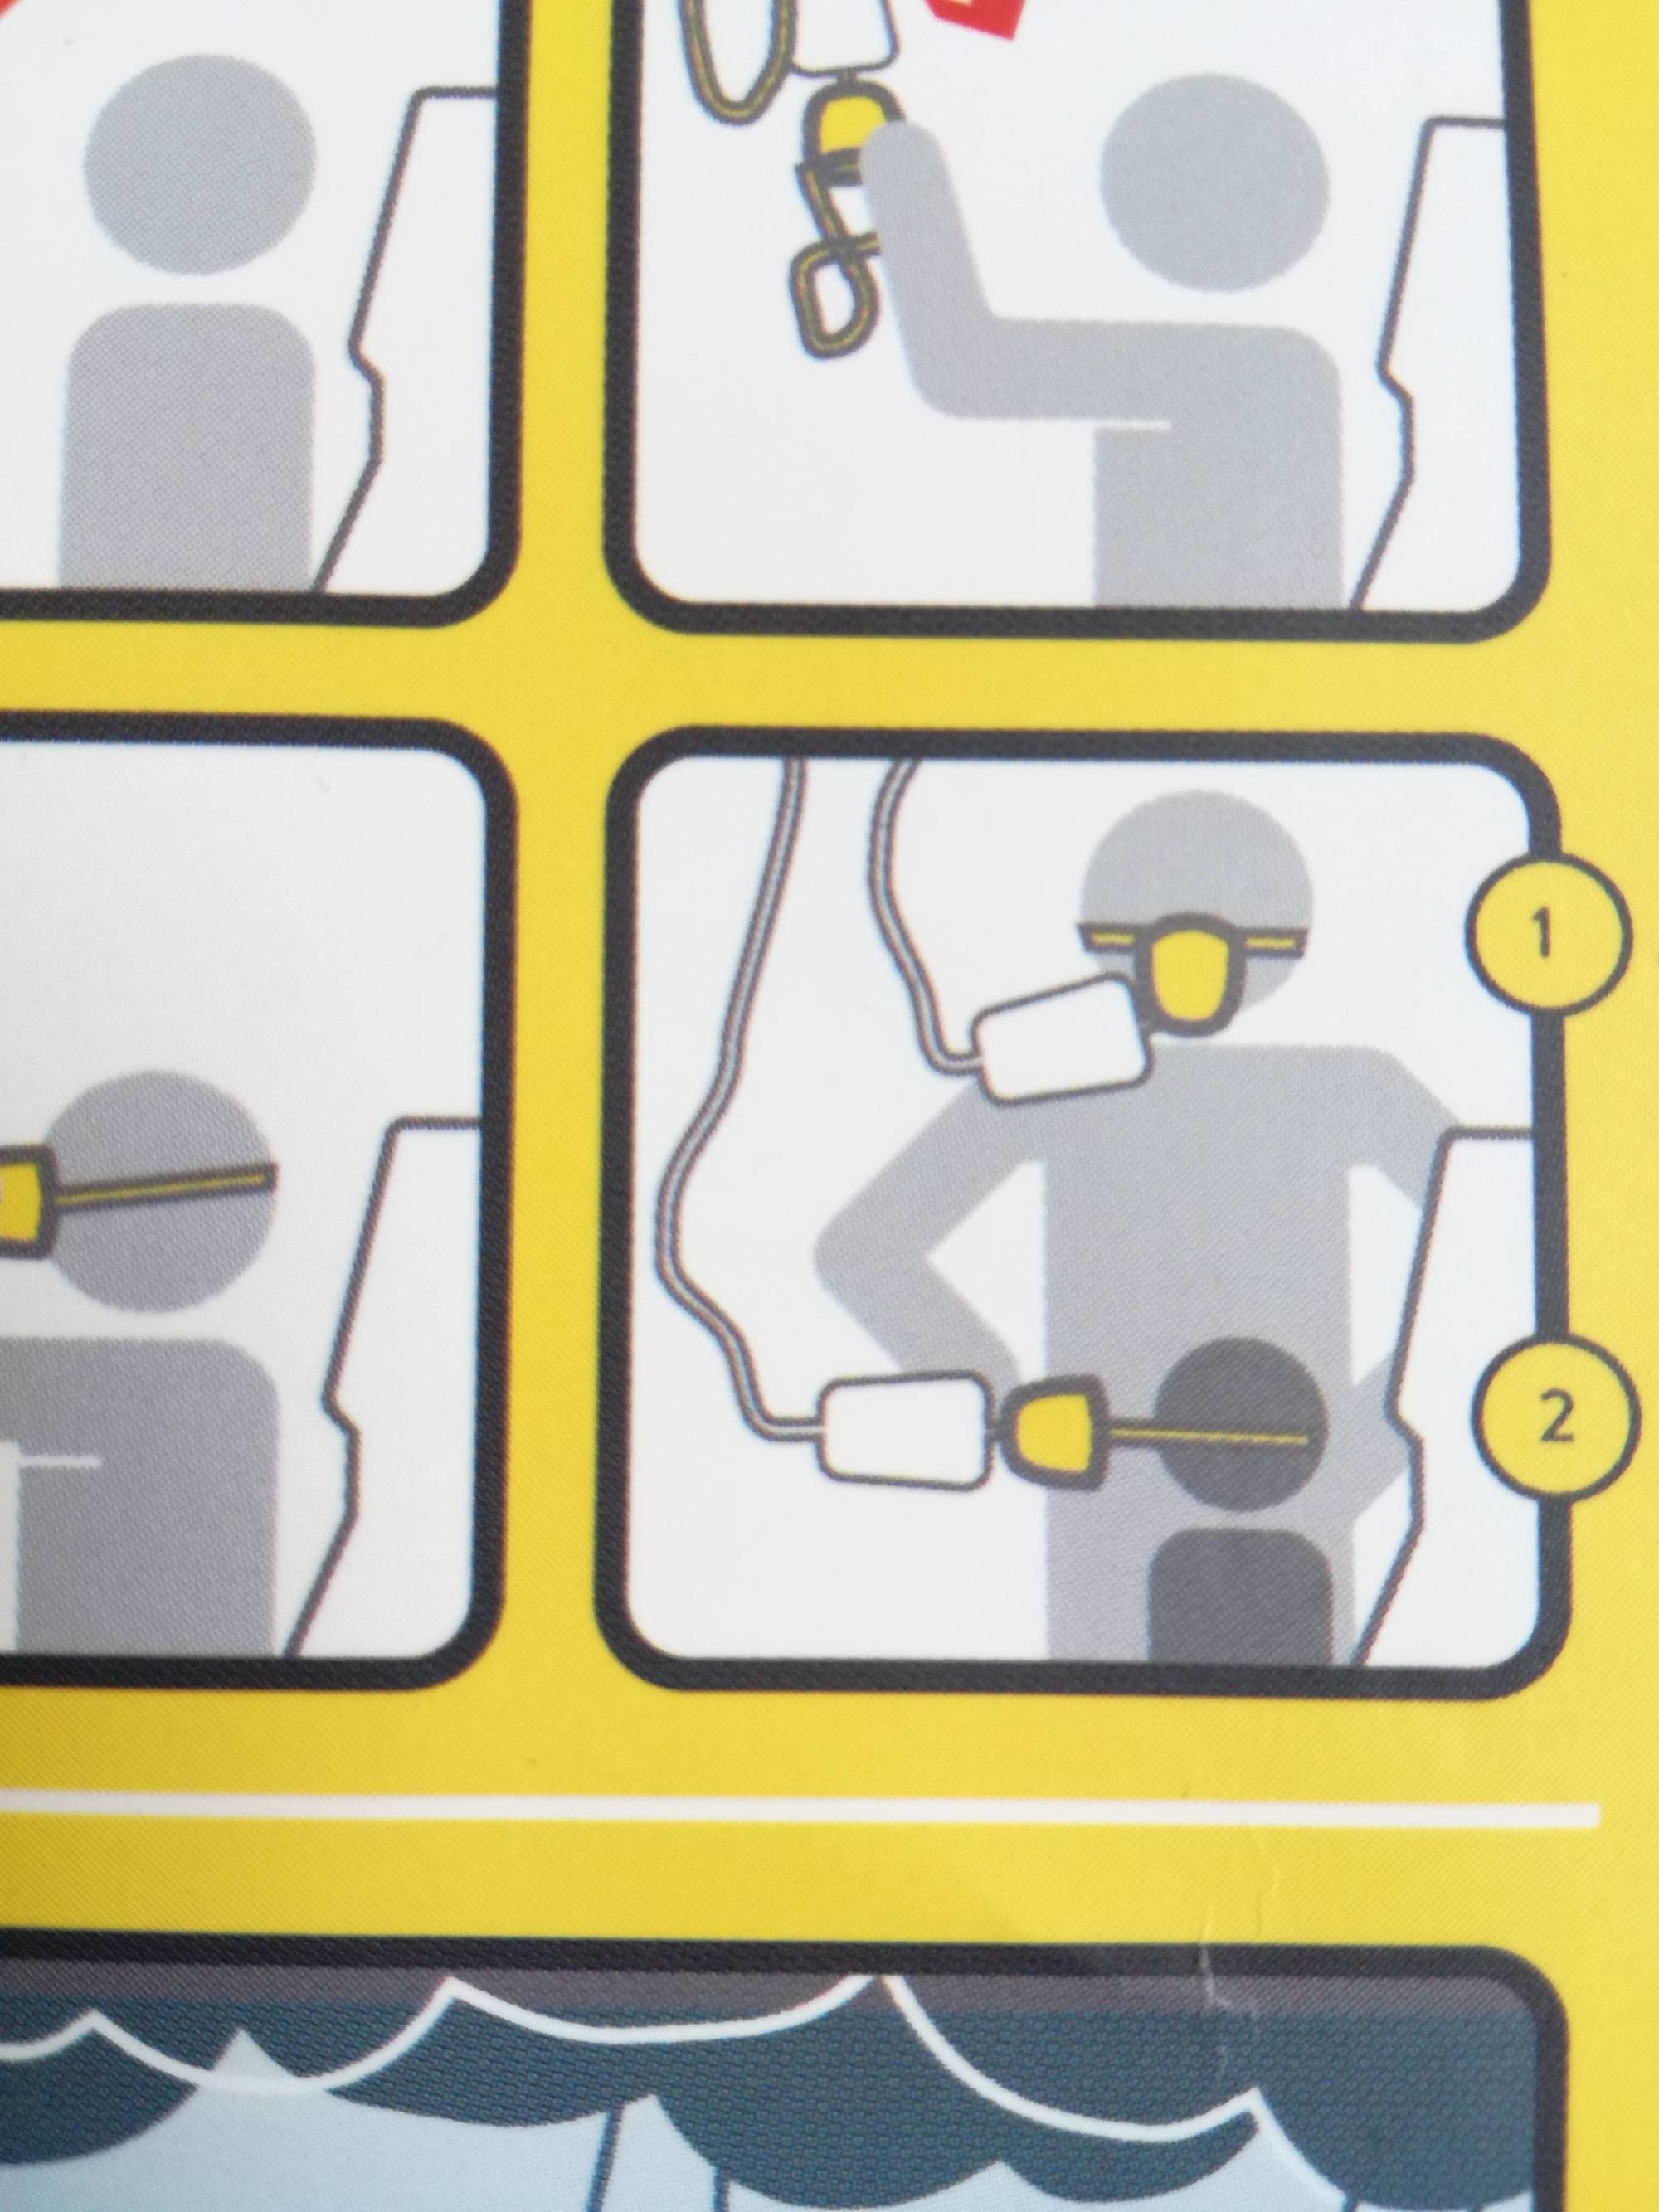 Strange choice of design for evacuation manual on airplane